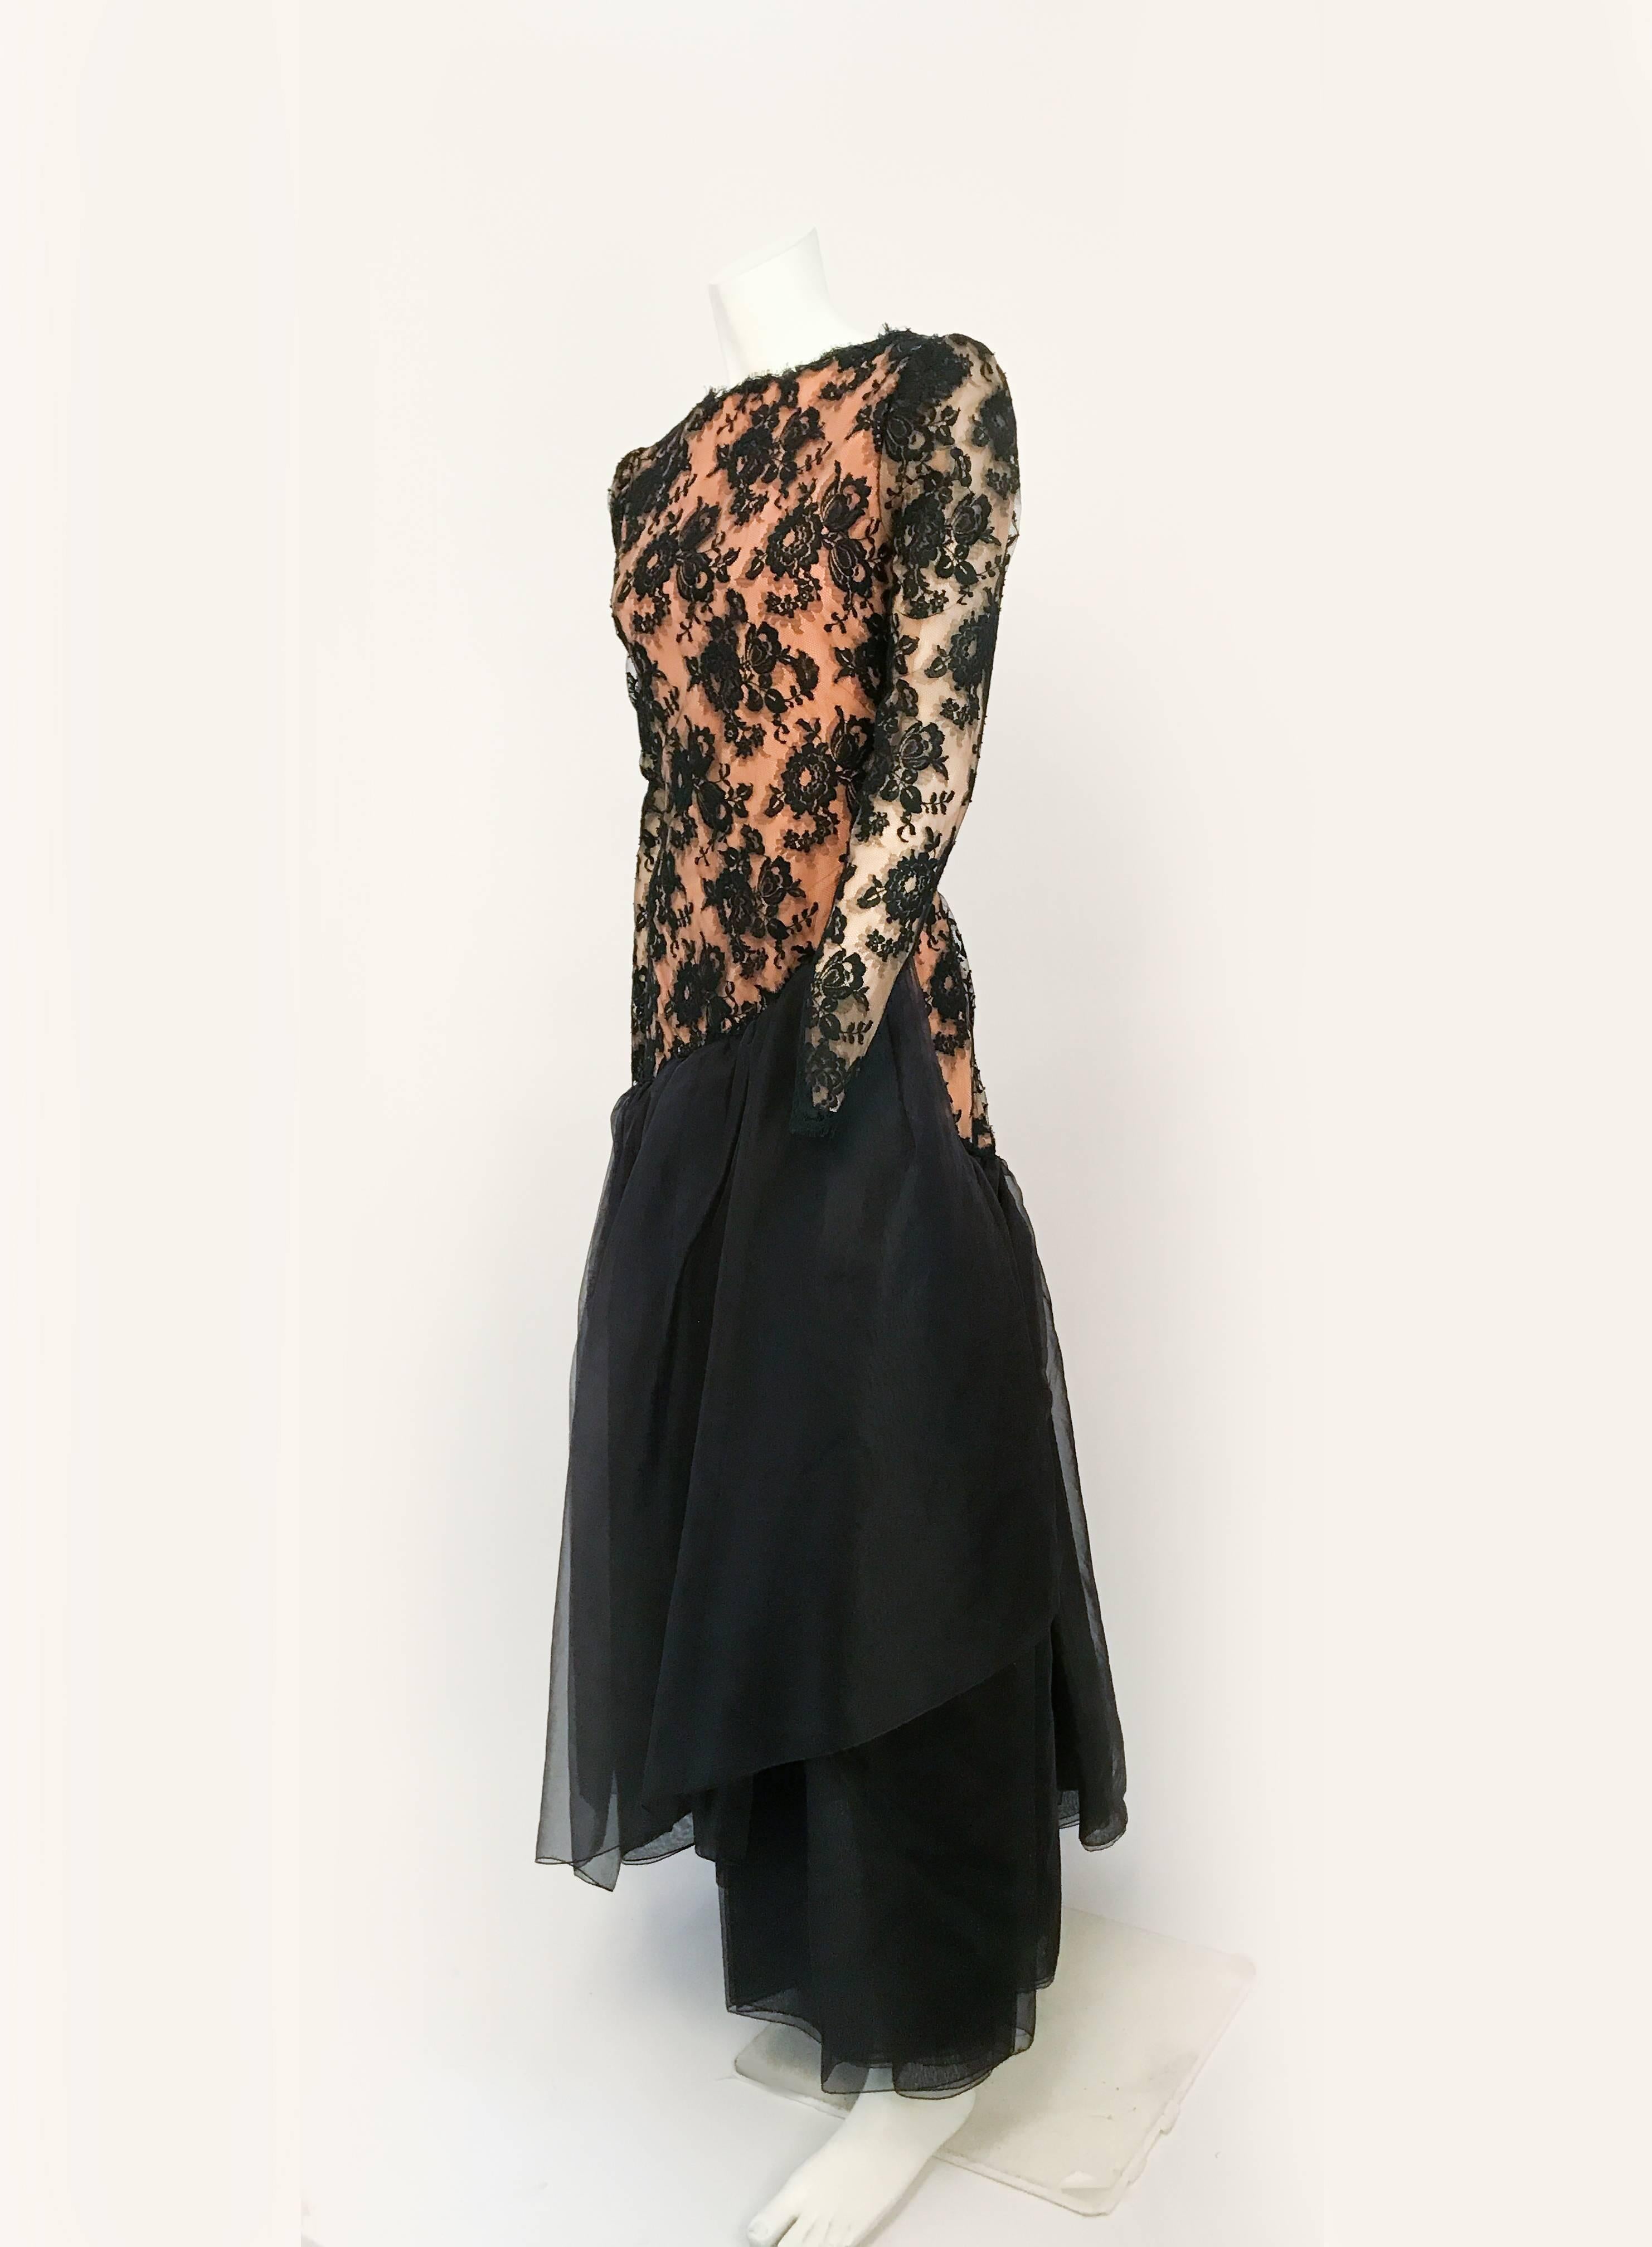 Women's 1980s Travilla Black Floral Lace Dress